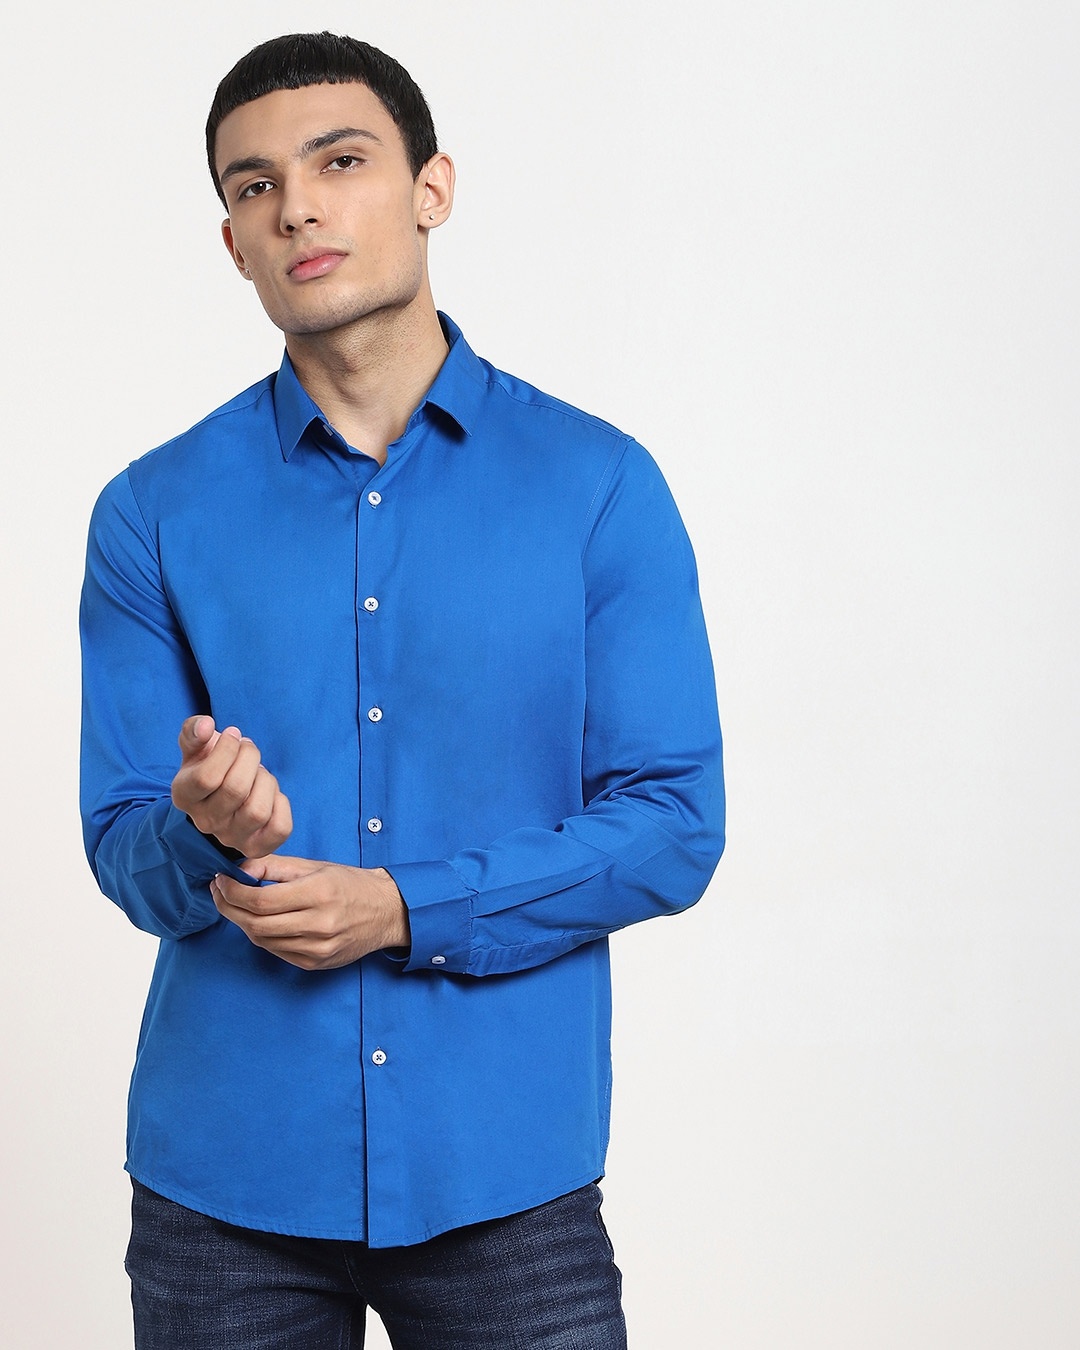 Buy Gibraltar Sea Solid Full Sleeve Shirt for Men blue Online at Bewakoof